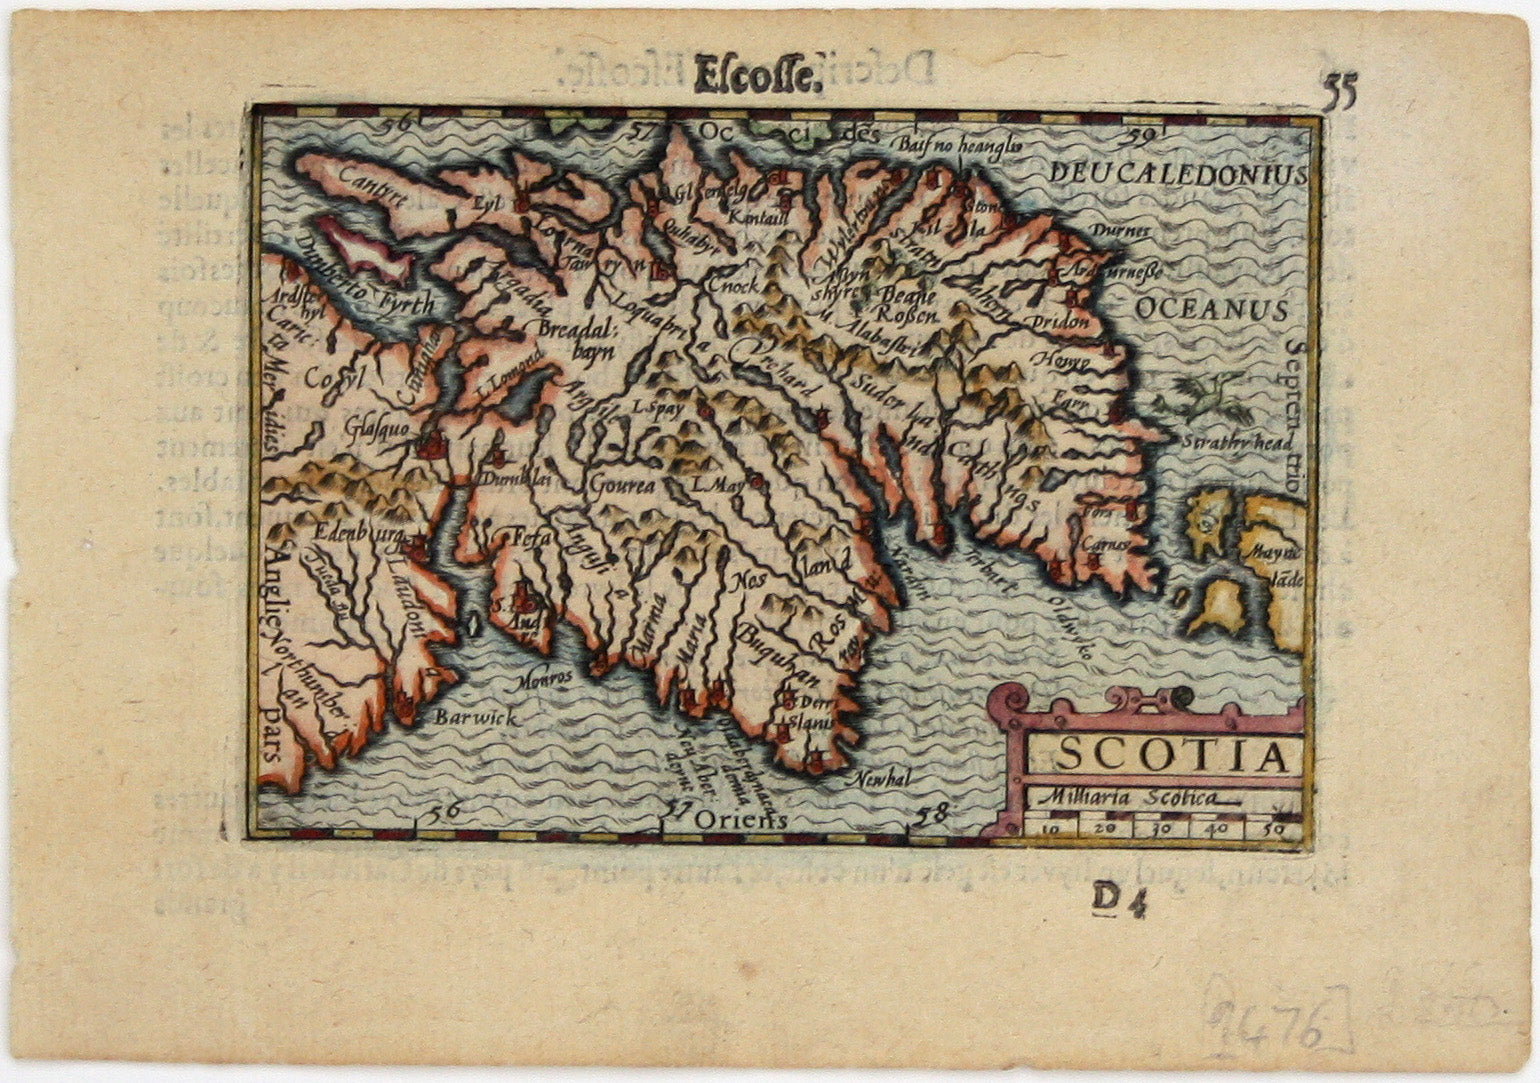 Bertius’ Miniature Map of Scotland, Early Edition